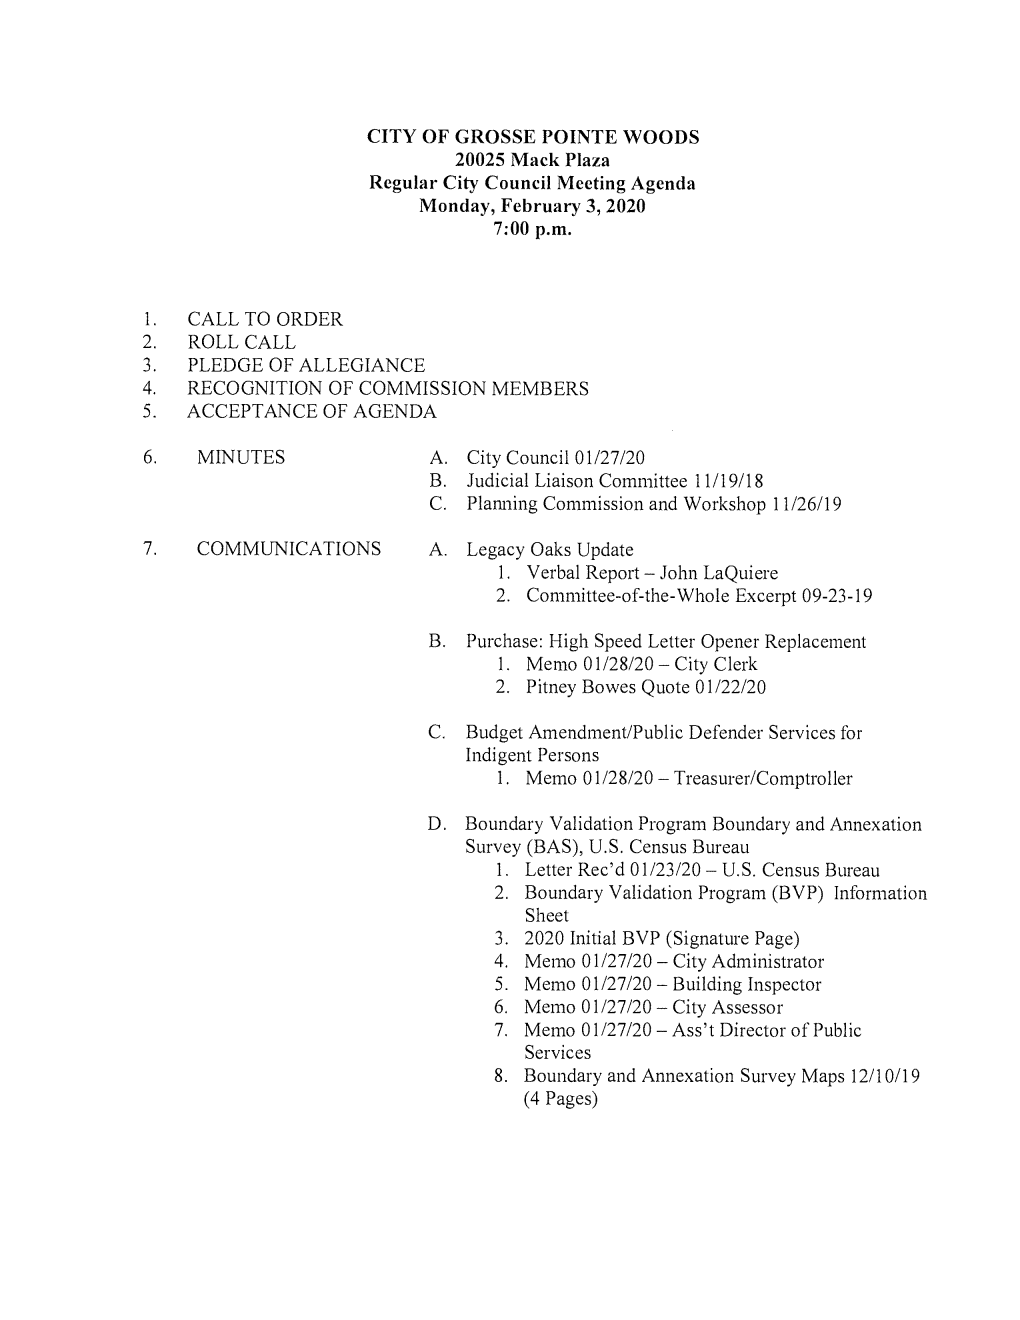 CITY of GROSSE POINTE WOODS 20025 Mack Plaza Regular City Council Meeting Agenda Monday, February 3, 2020 7:00 P.M